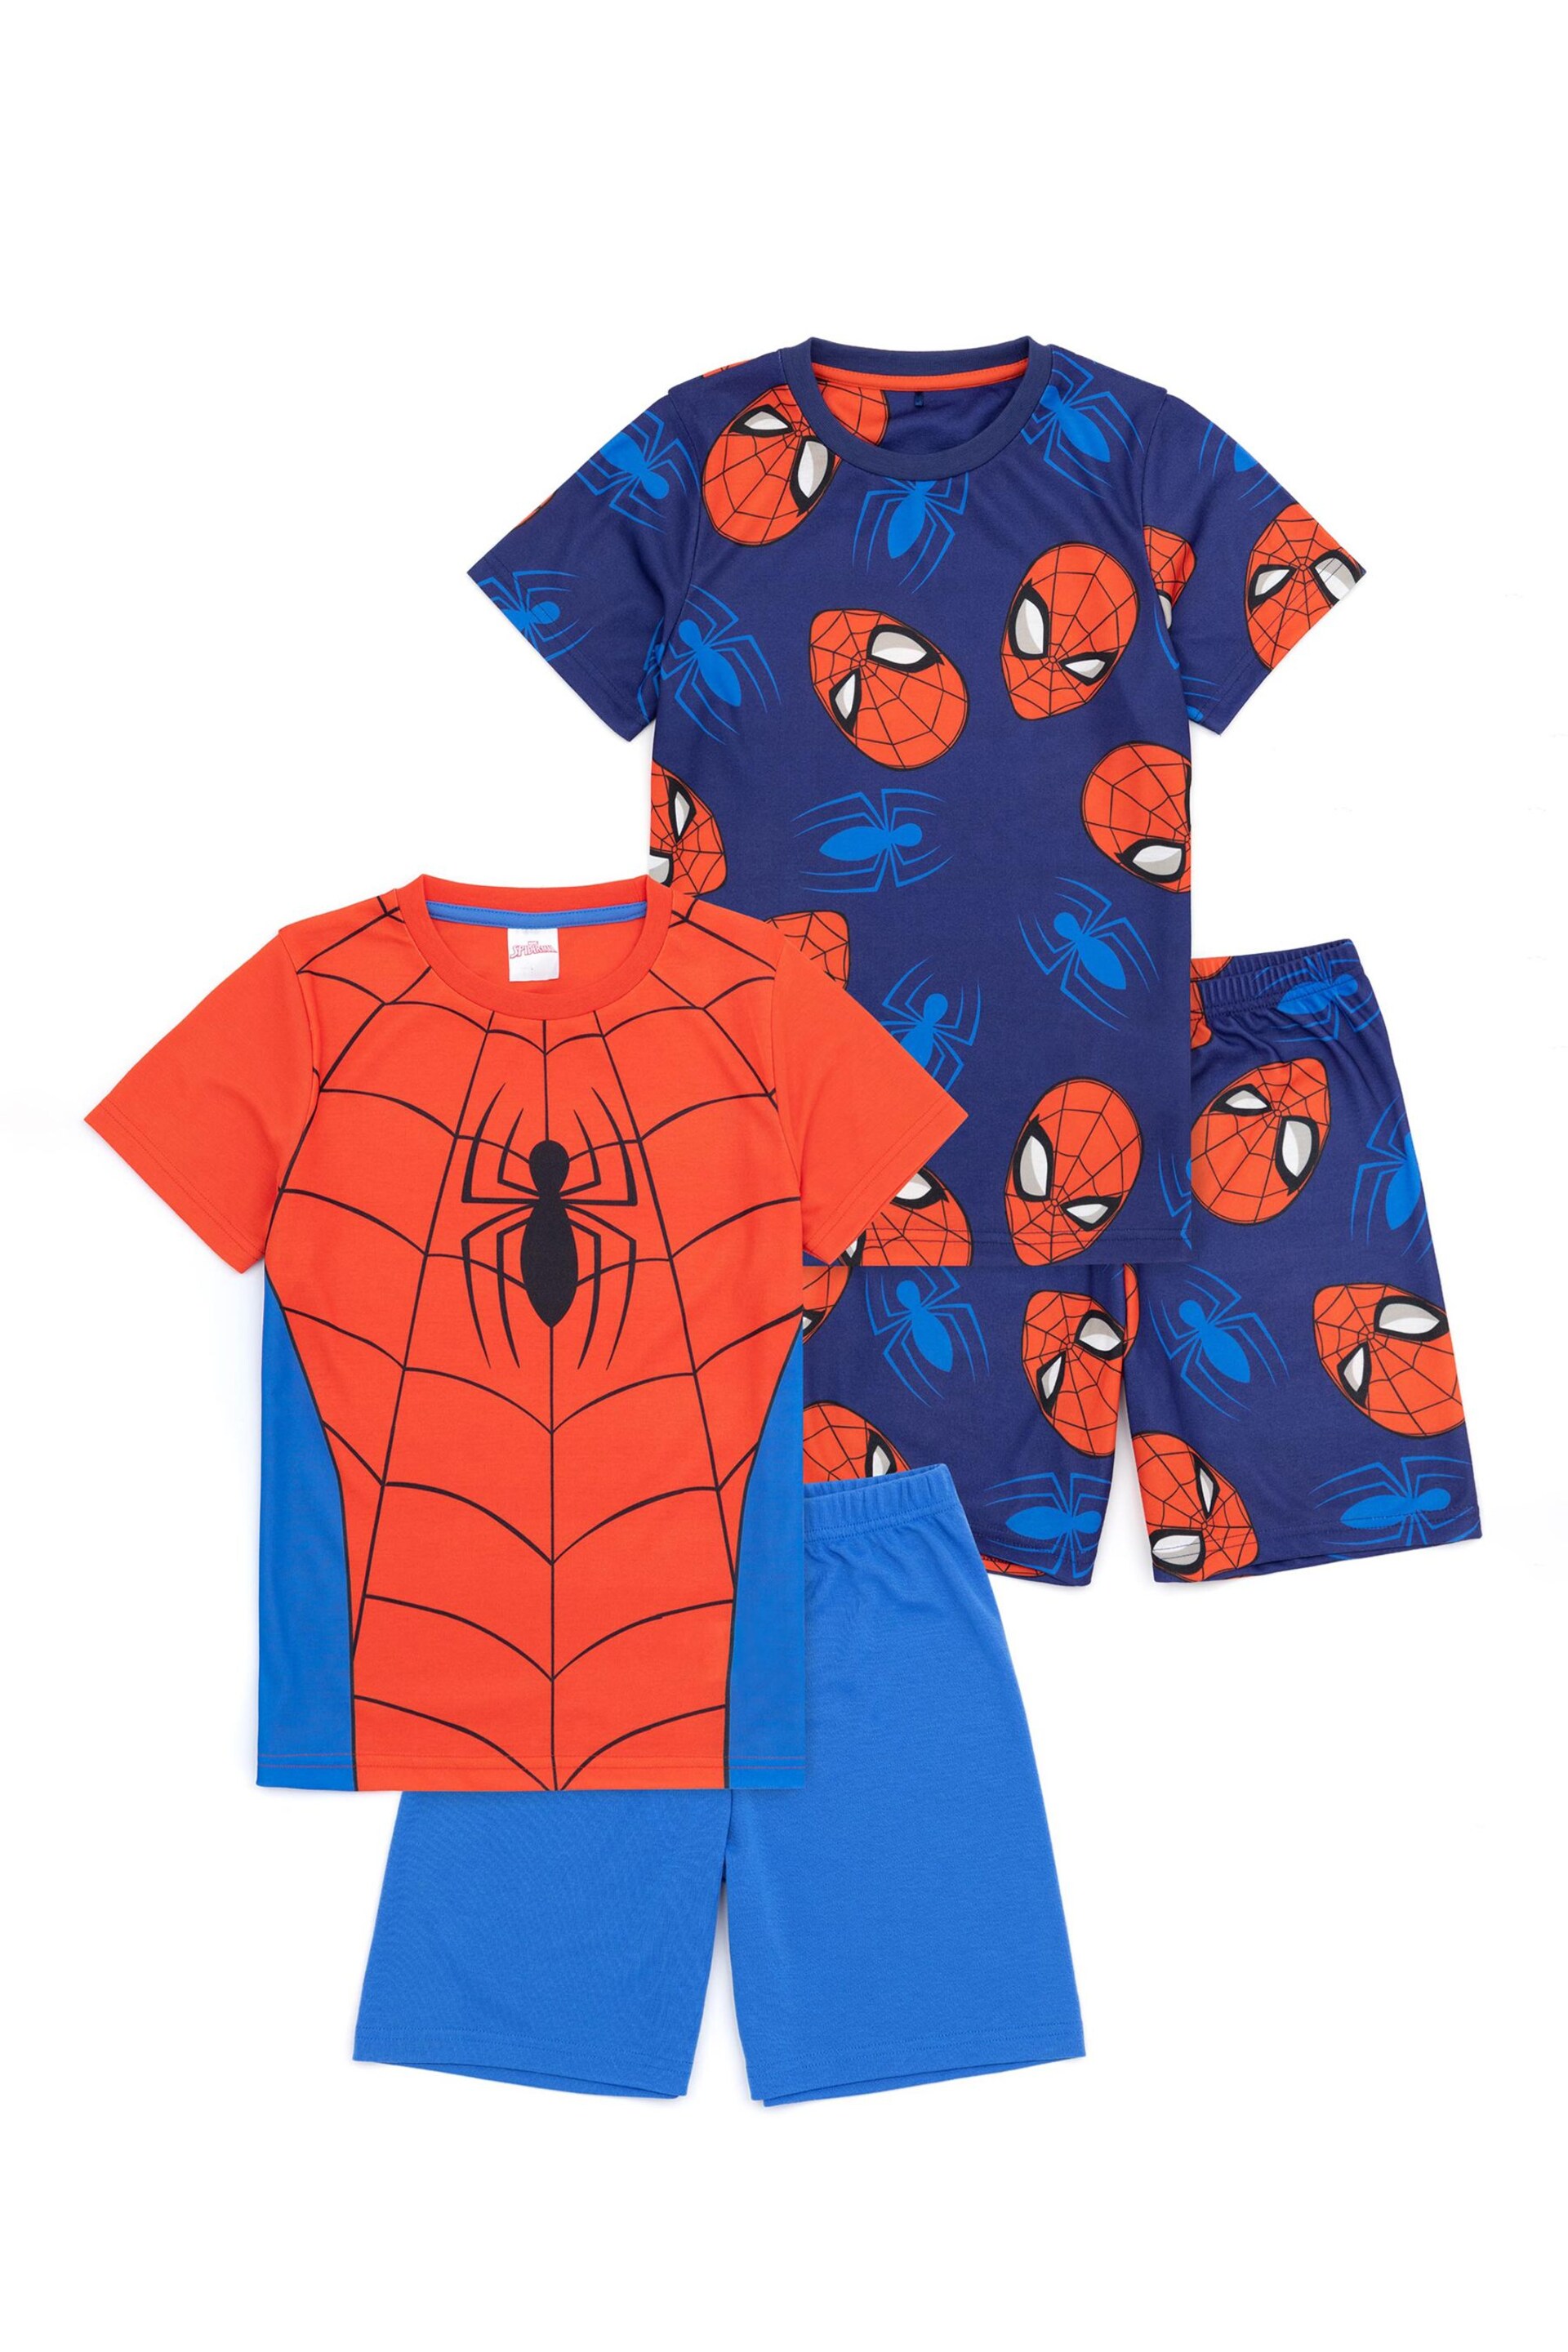 Vanilla Underground Red Boys Spiderman Pyjamas 2 Pack - Image 1 of 5